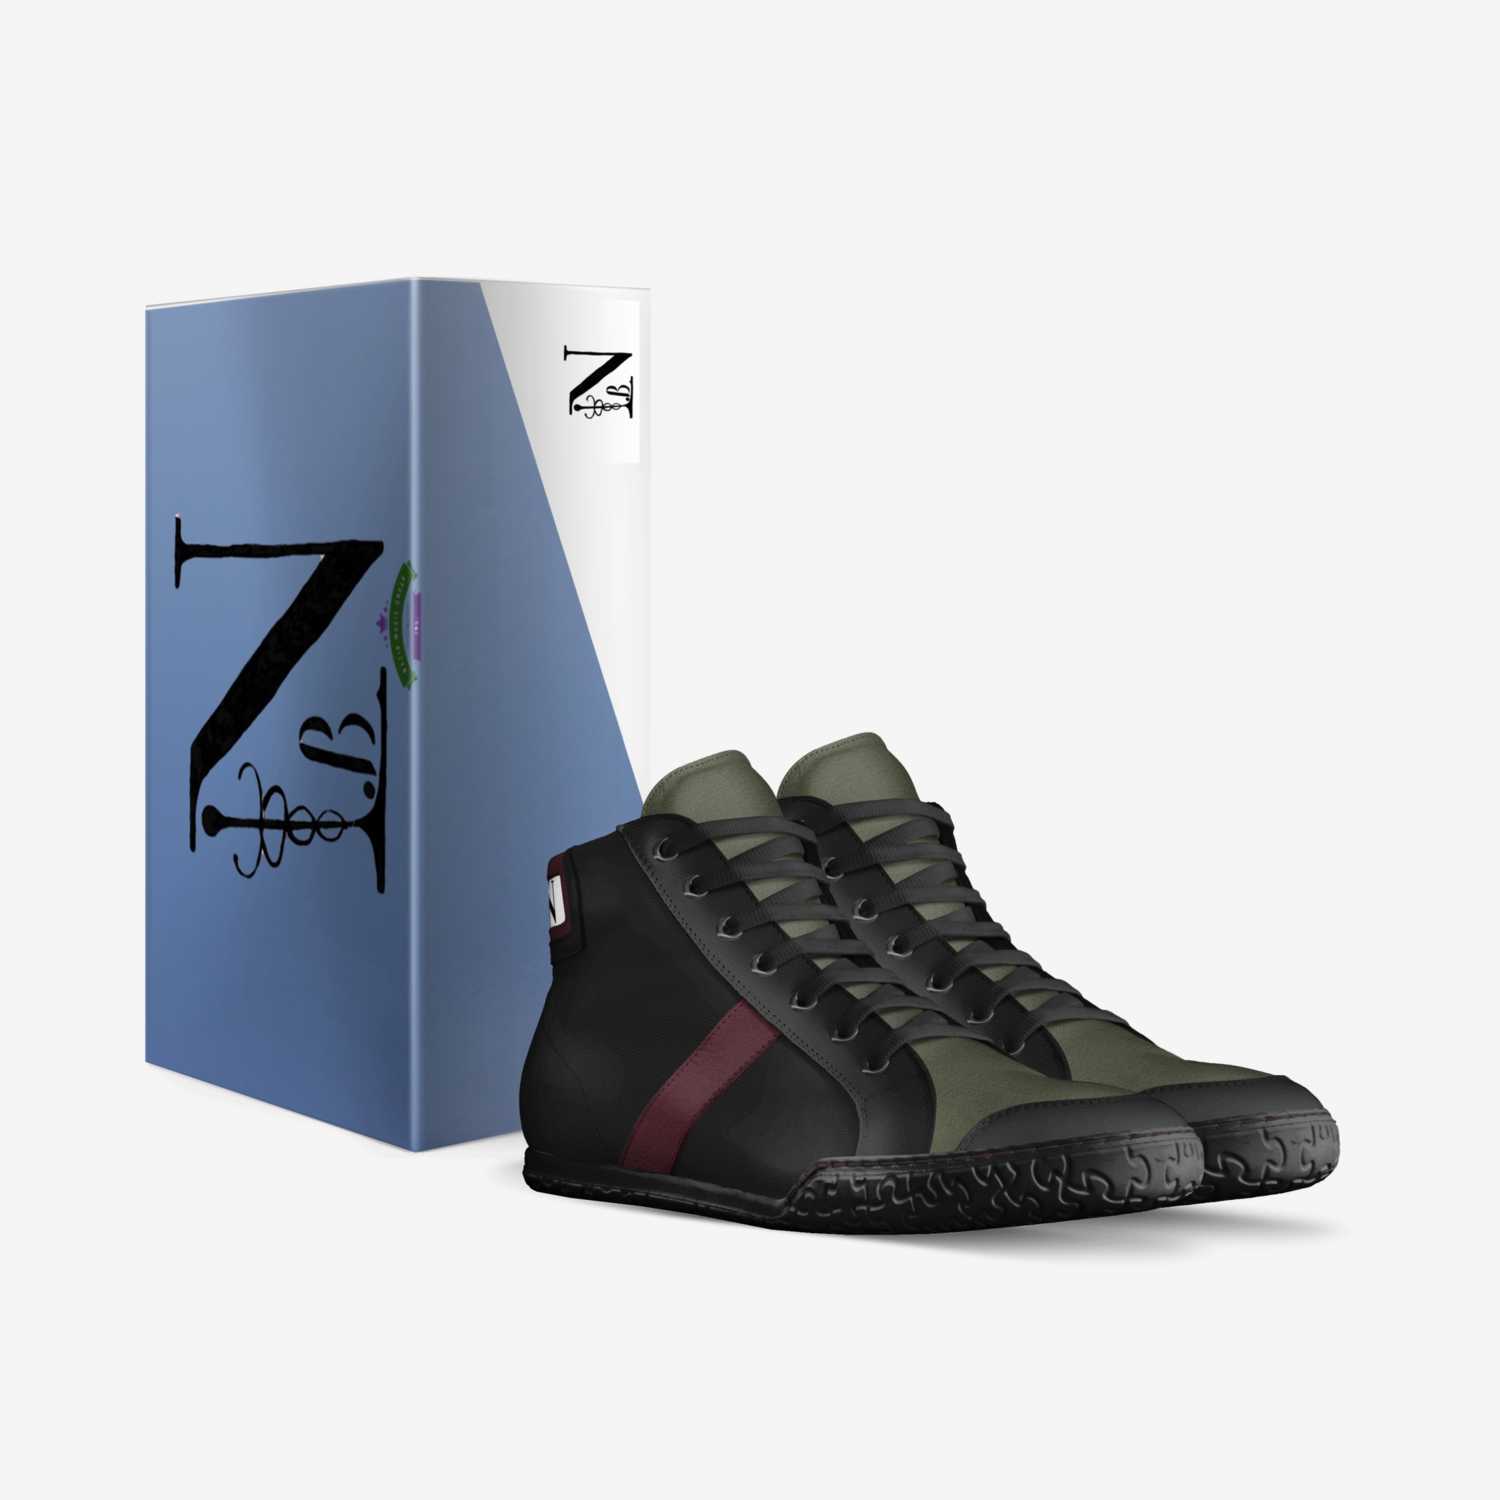 Nerdie Blaq x1 custom made in Italy shoes by Cornelius Bowser Jr | Box view